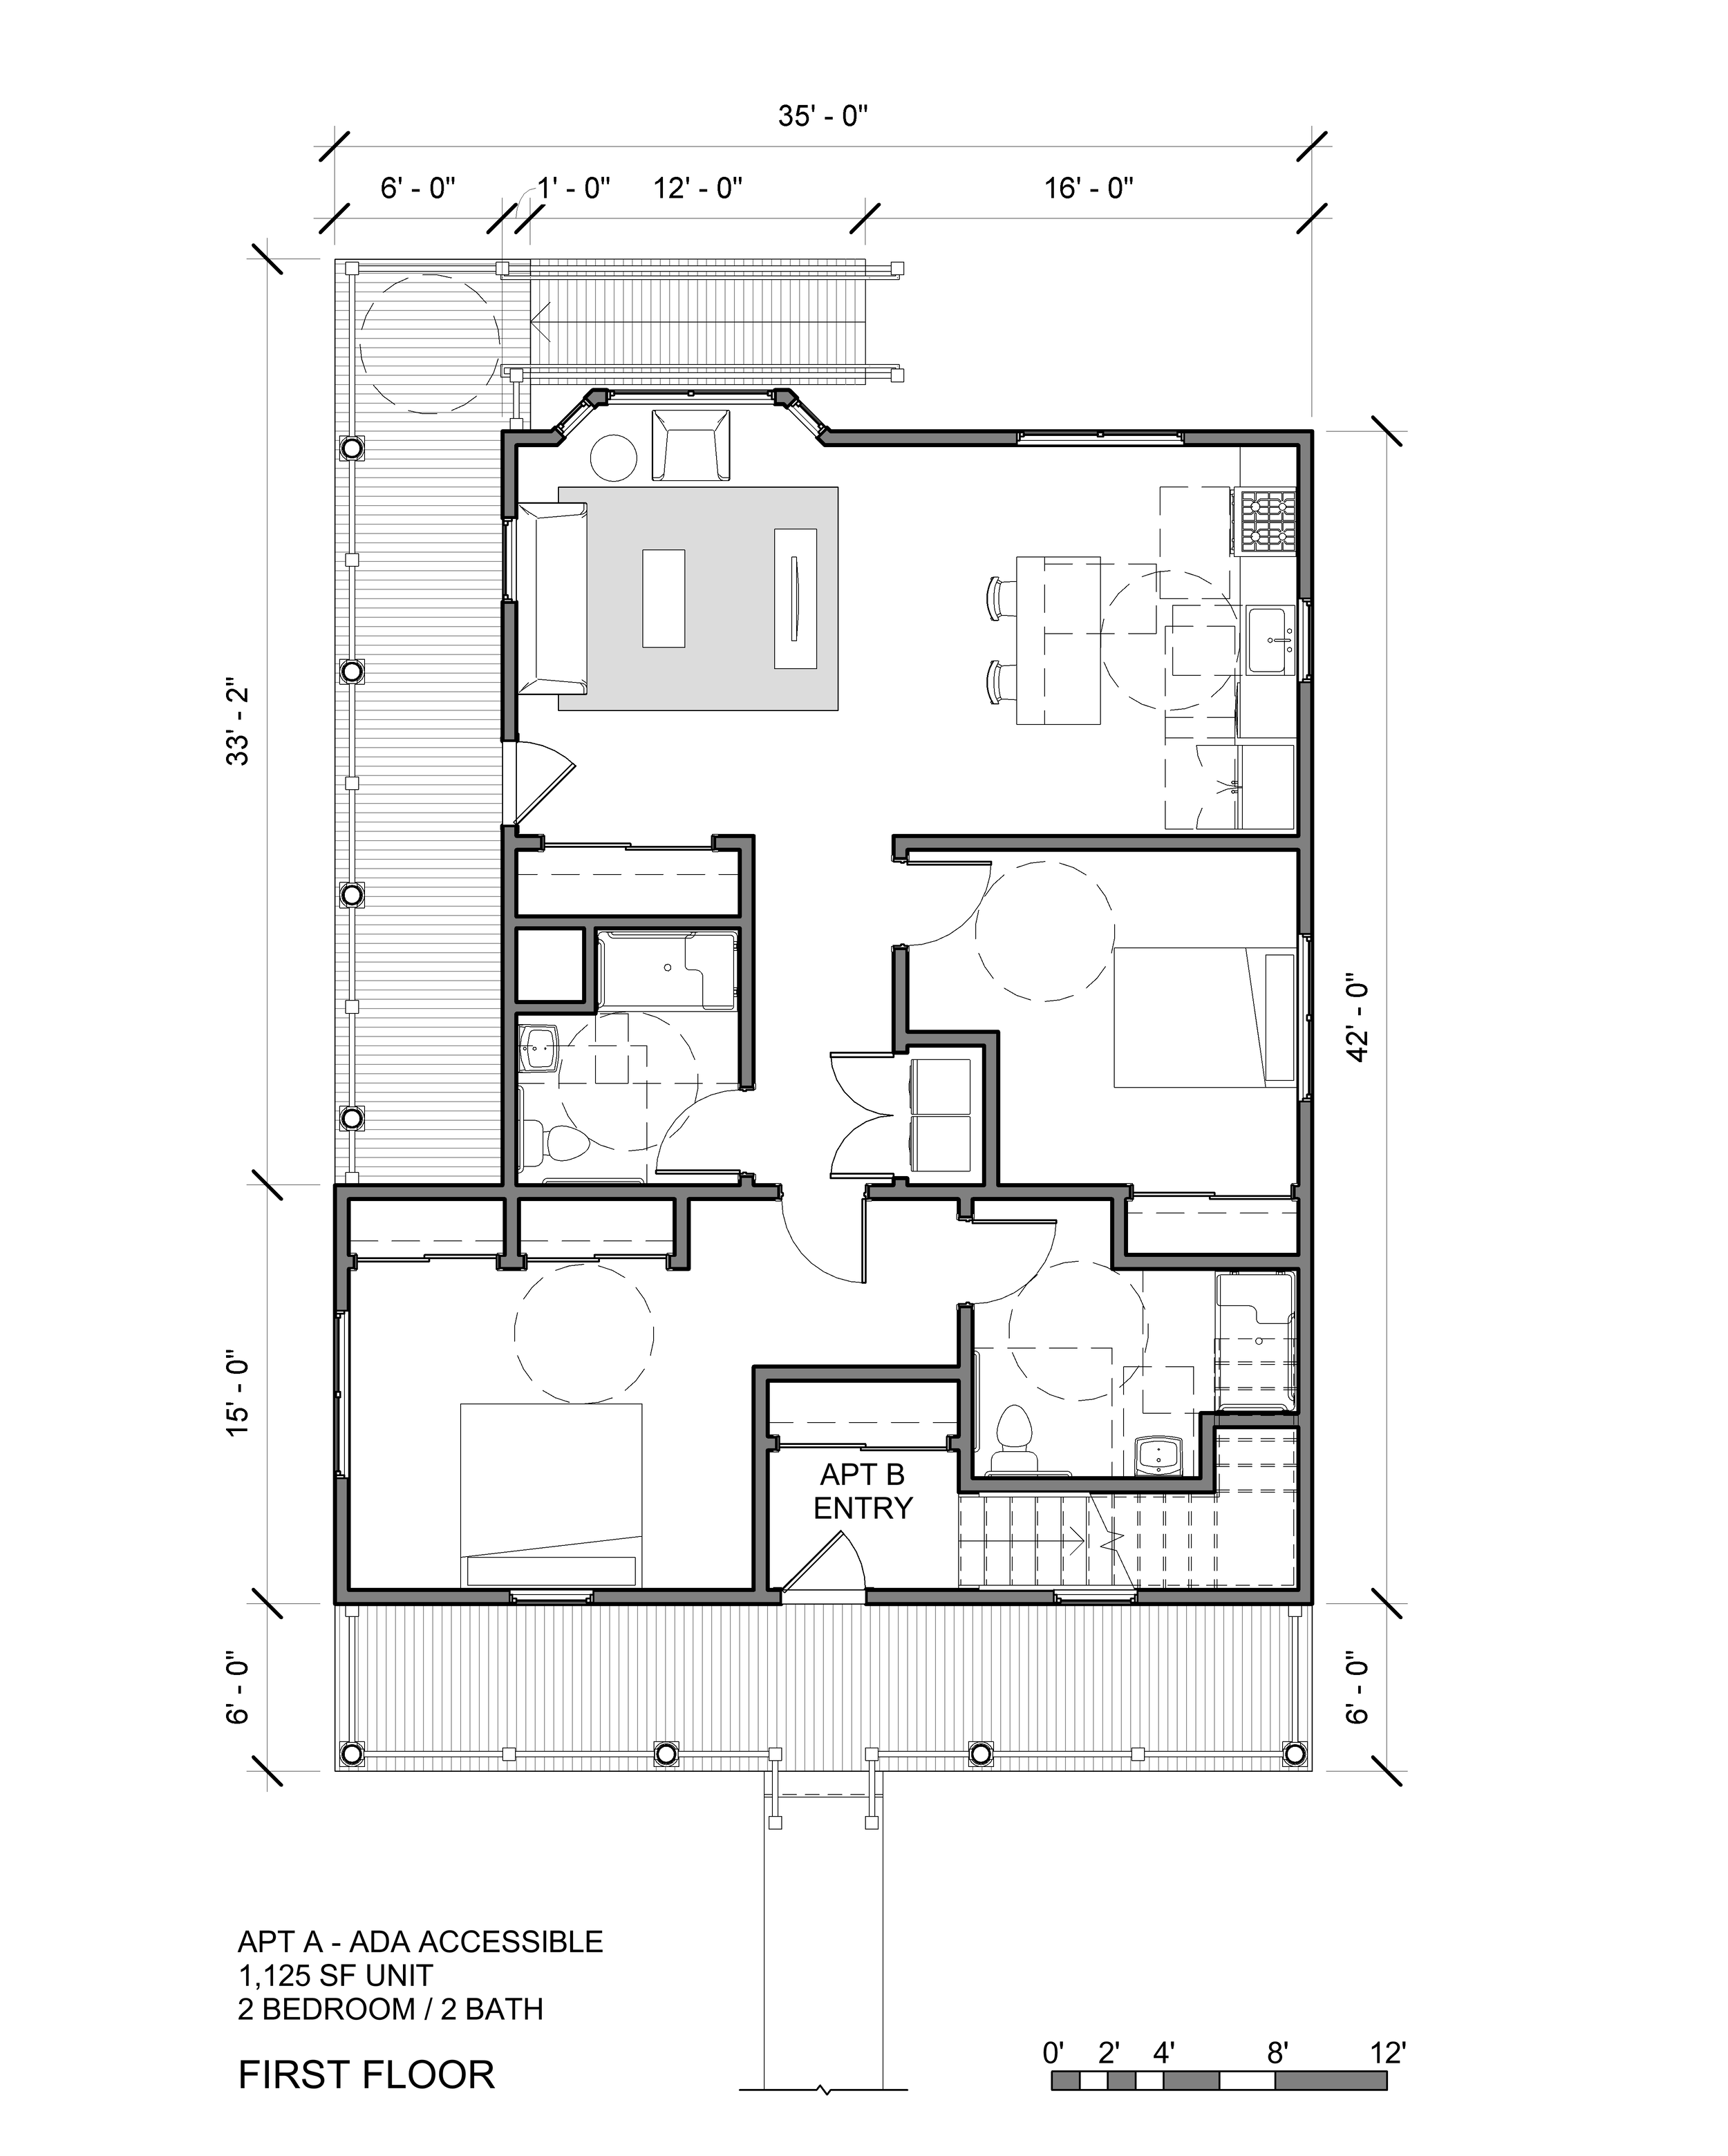 2021-05-09 BRILC Concept Plans - Floor Plan - 1002 CAMPBELL - FIRST FLOOR - SCHEMATIC.png